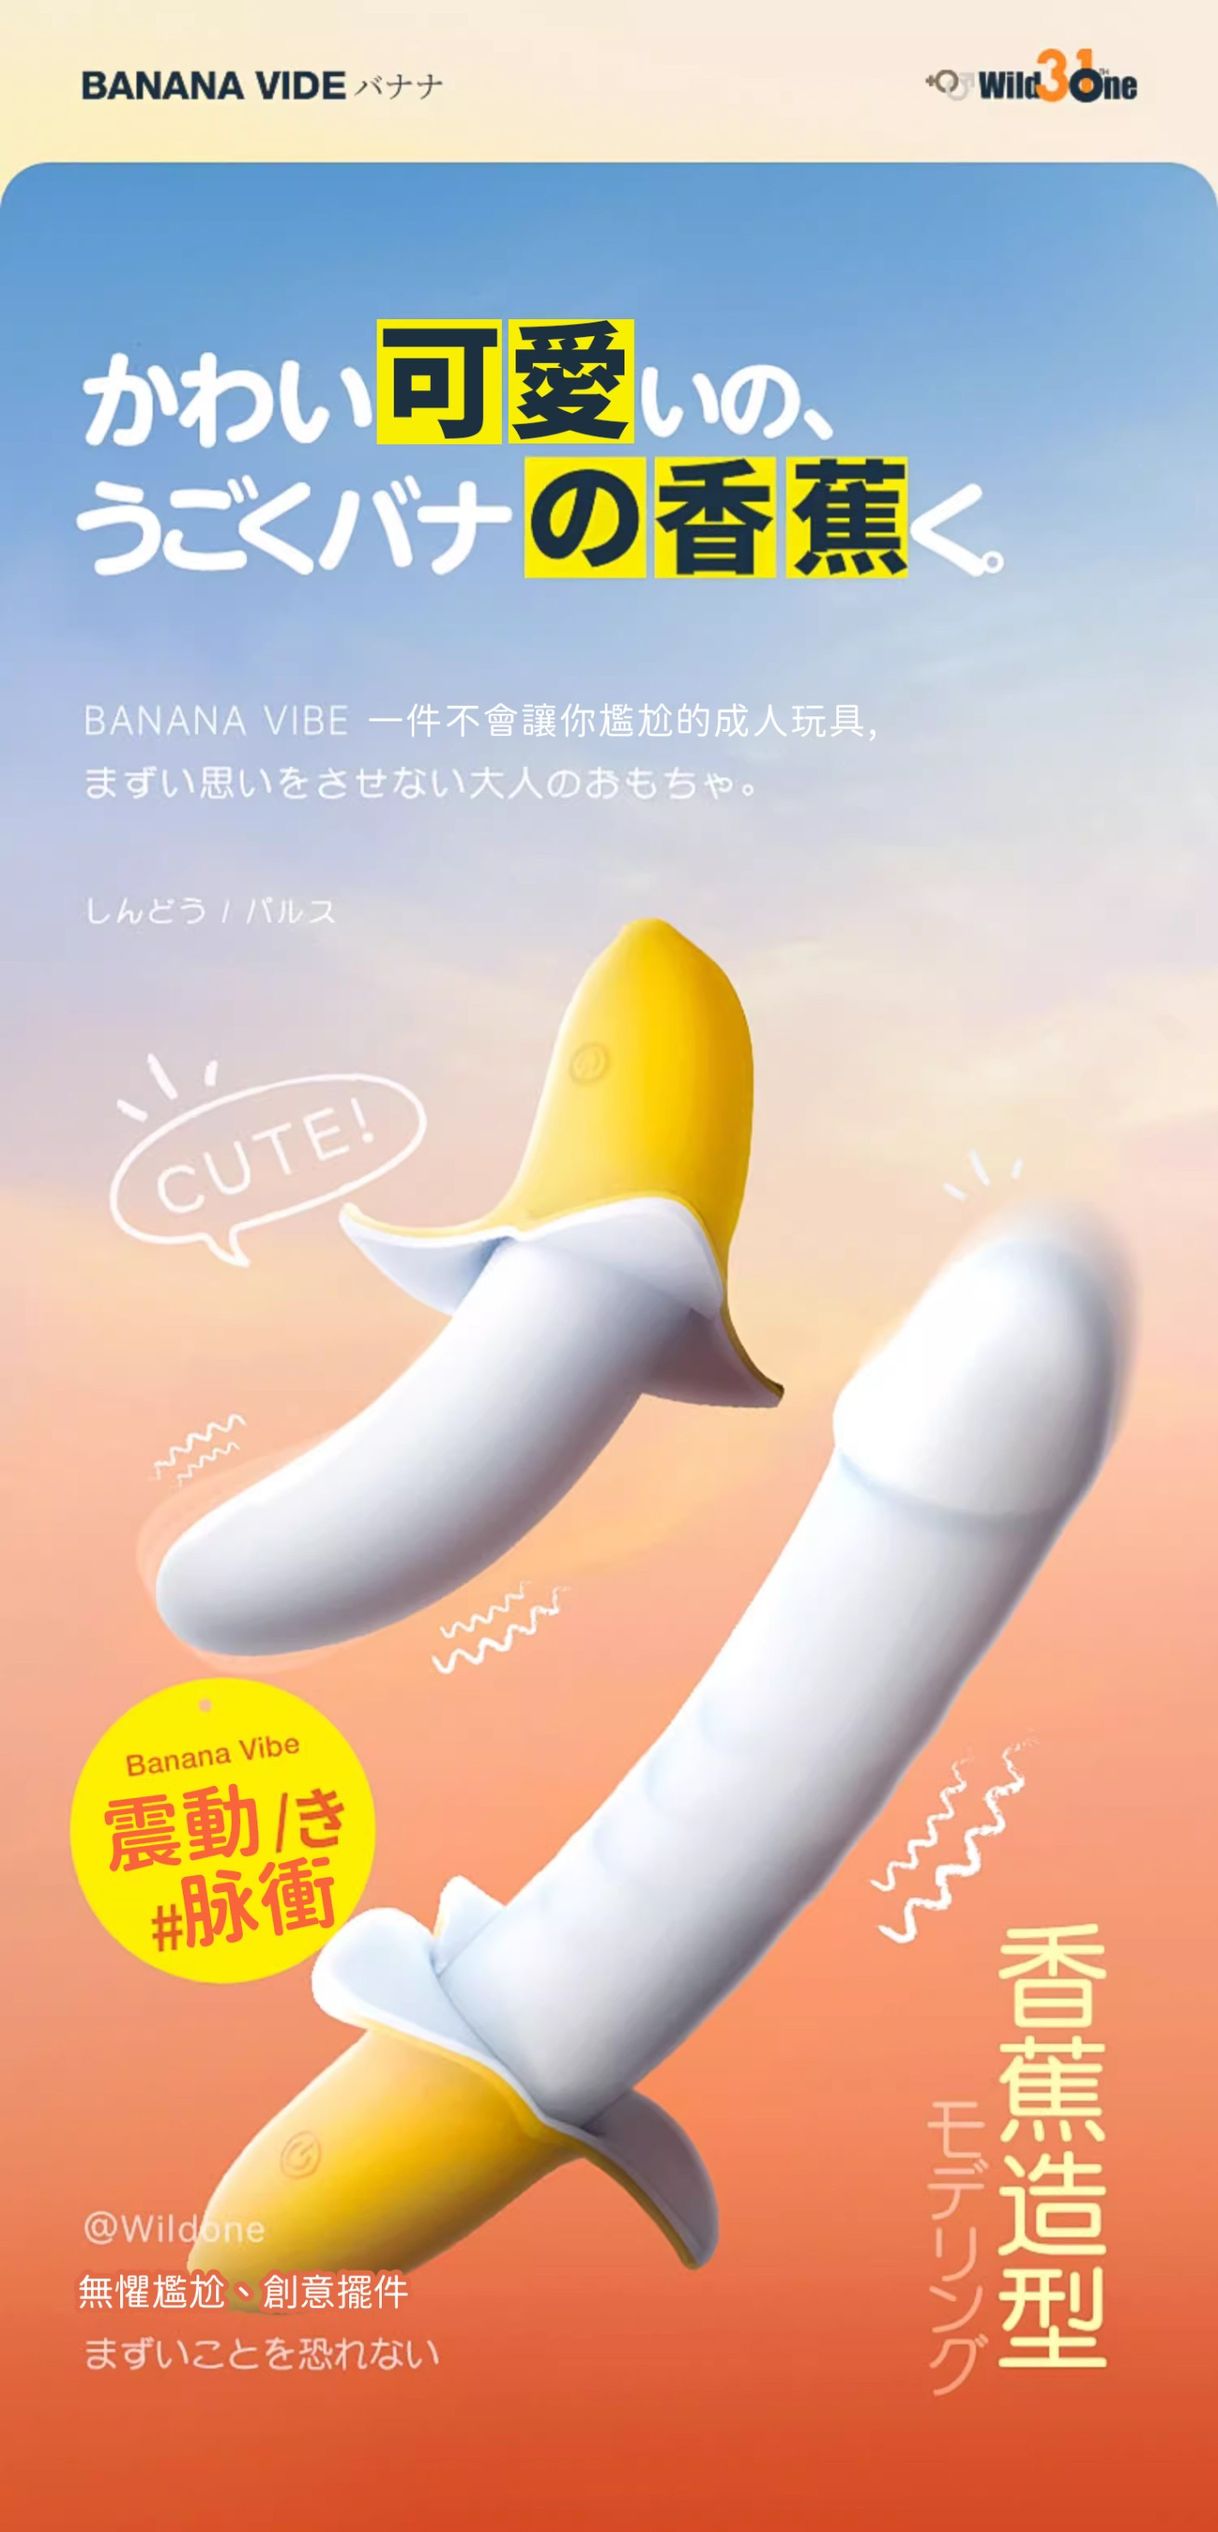 SSI Banana Vibe Vina - Adult Loving